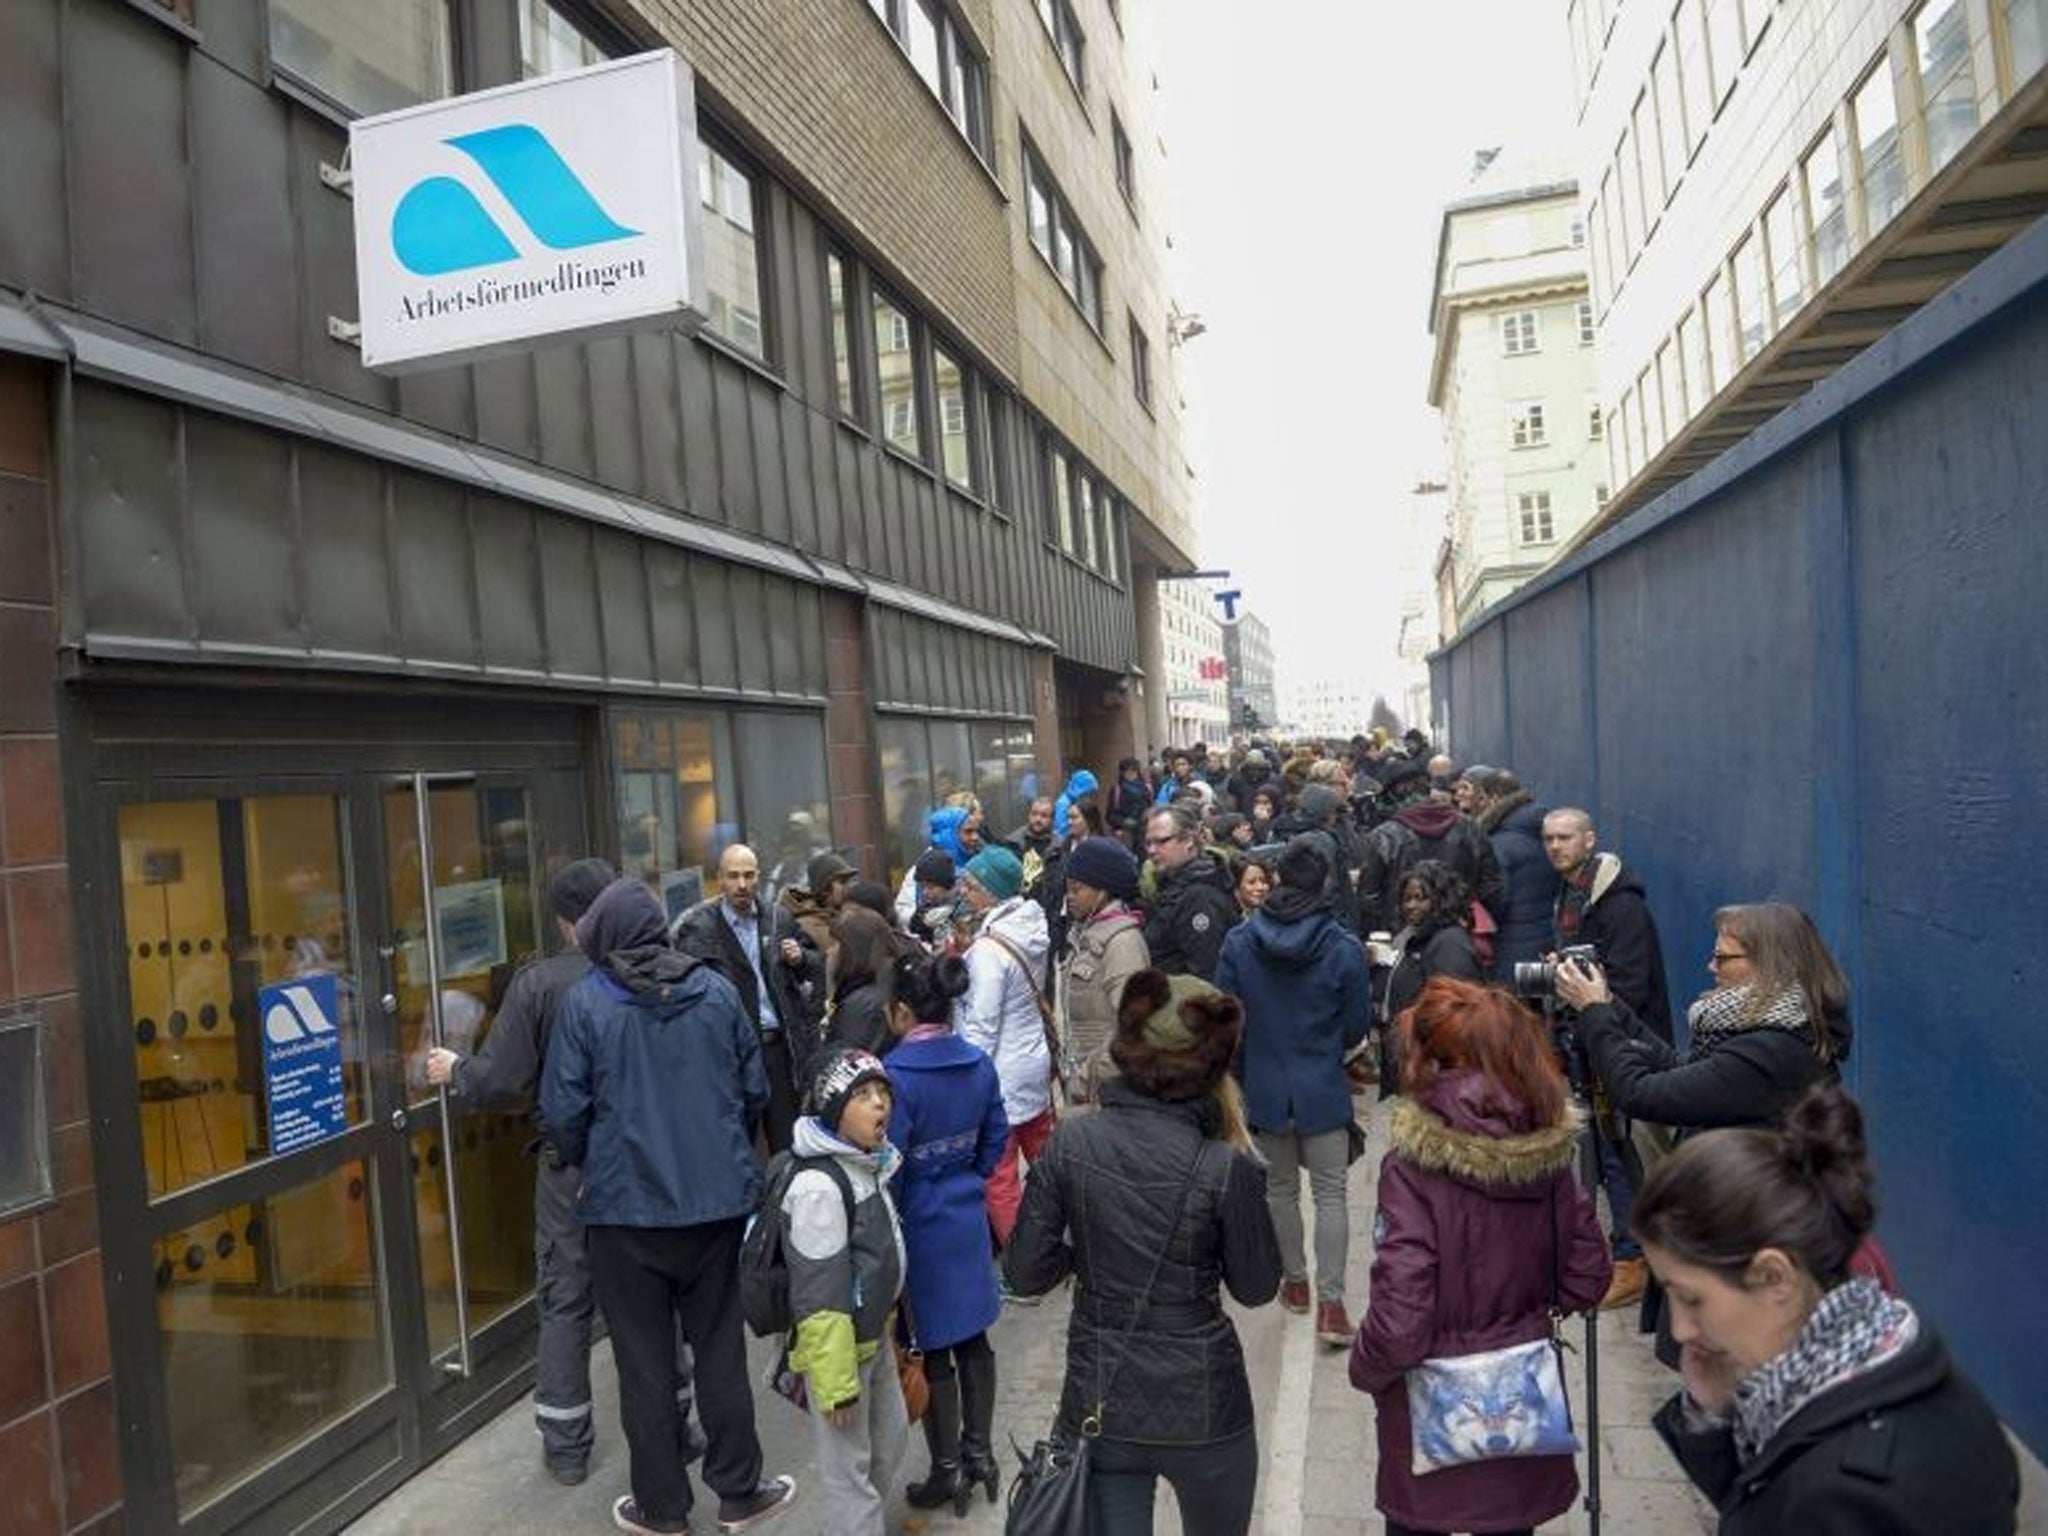 Job-seekers congregate outside the Swedish job centre